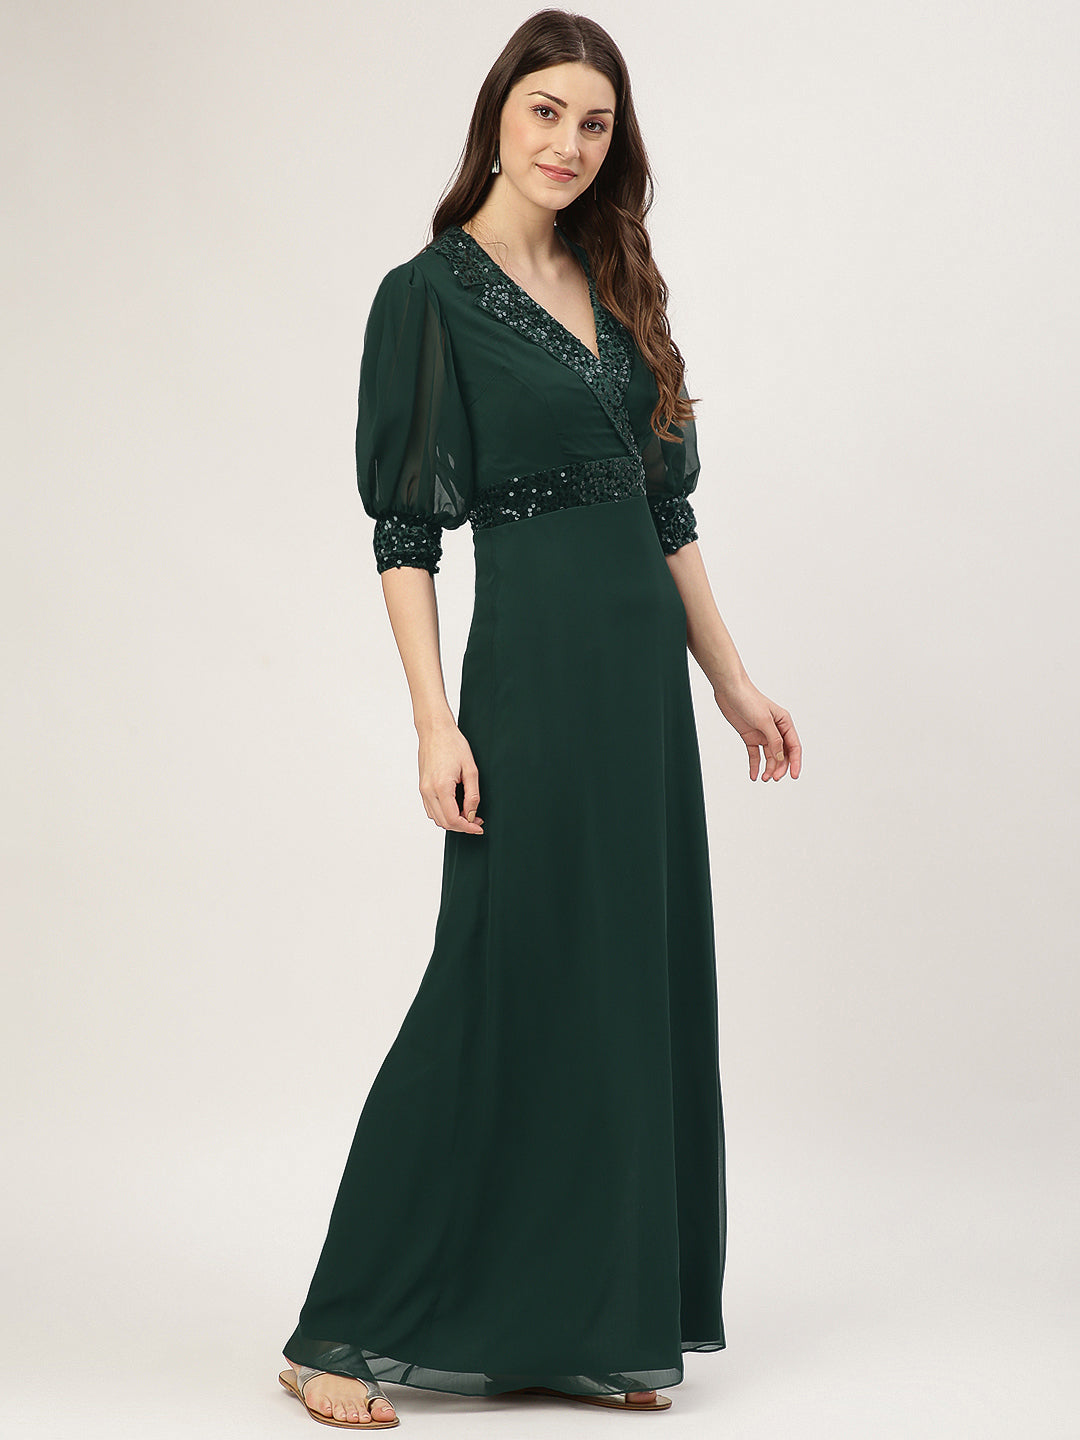 Green Embellished Slit Long Dress with 3/4 Sleeves